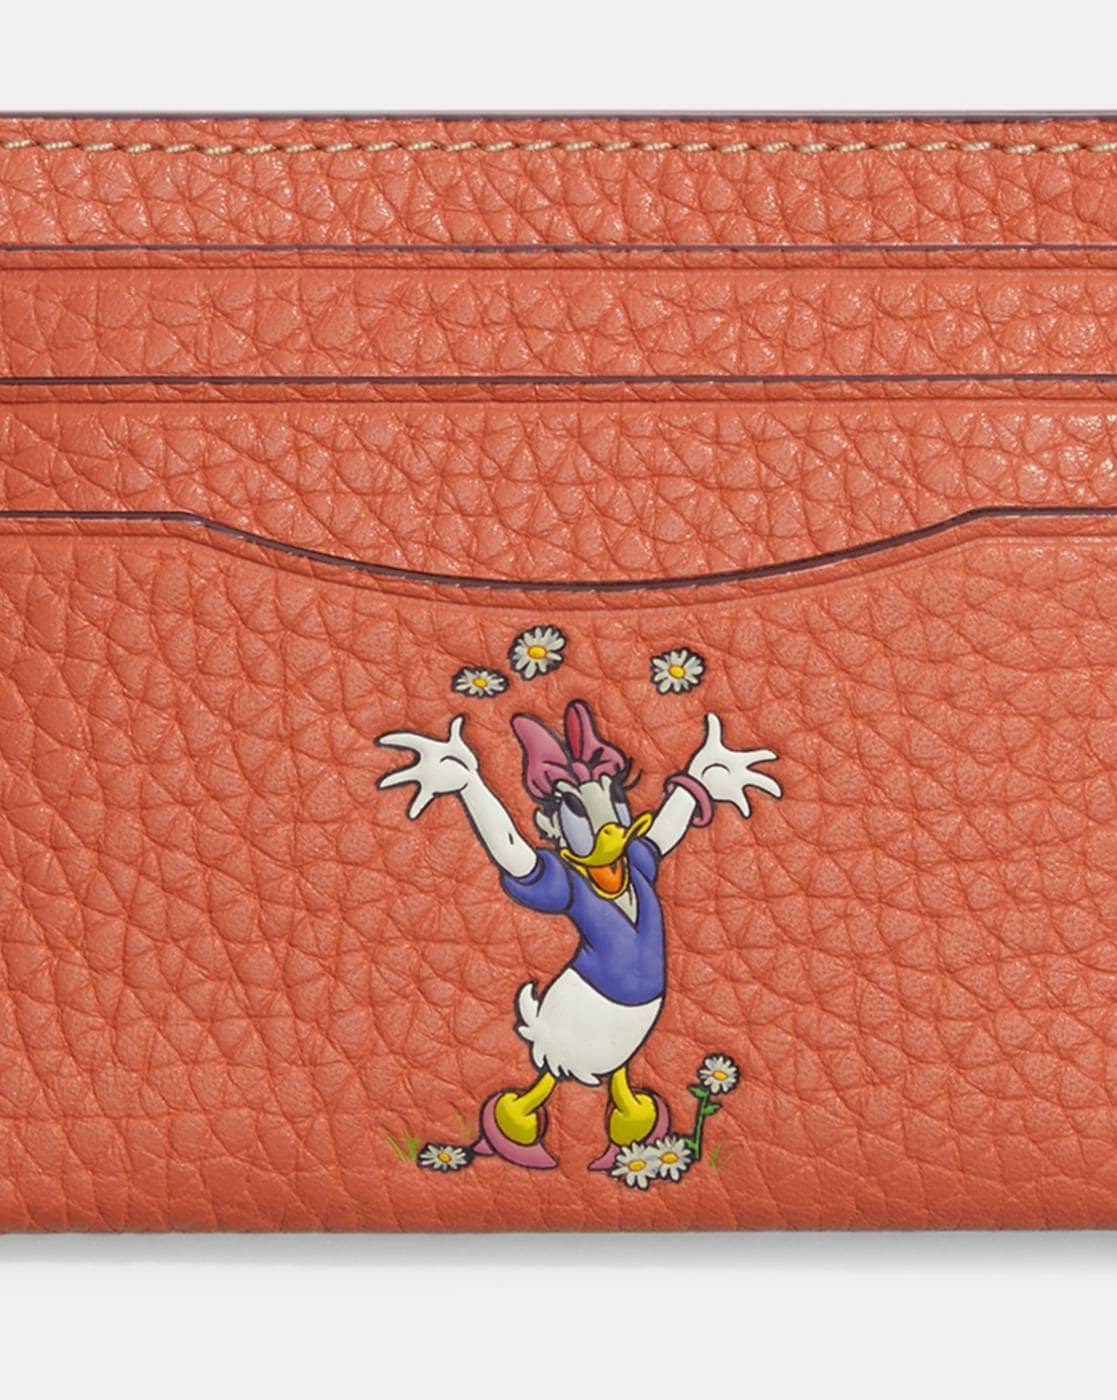 Disney X Coach Regenerative Leather Card Case